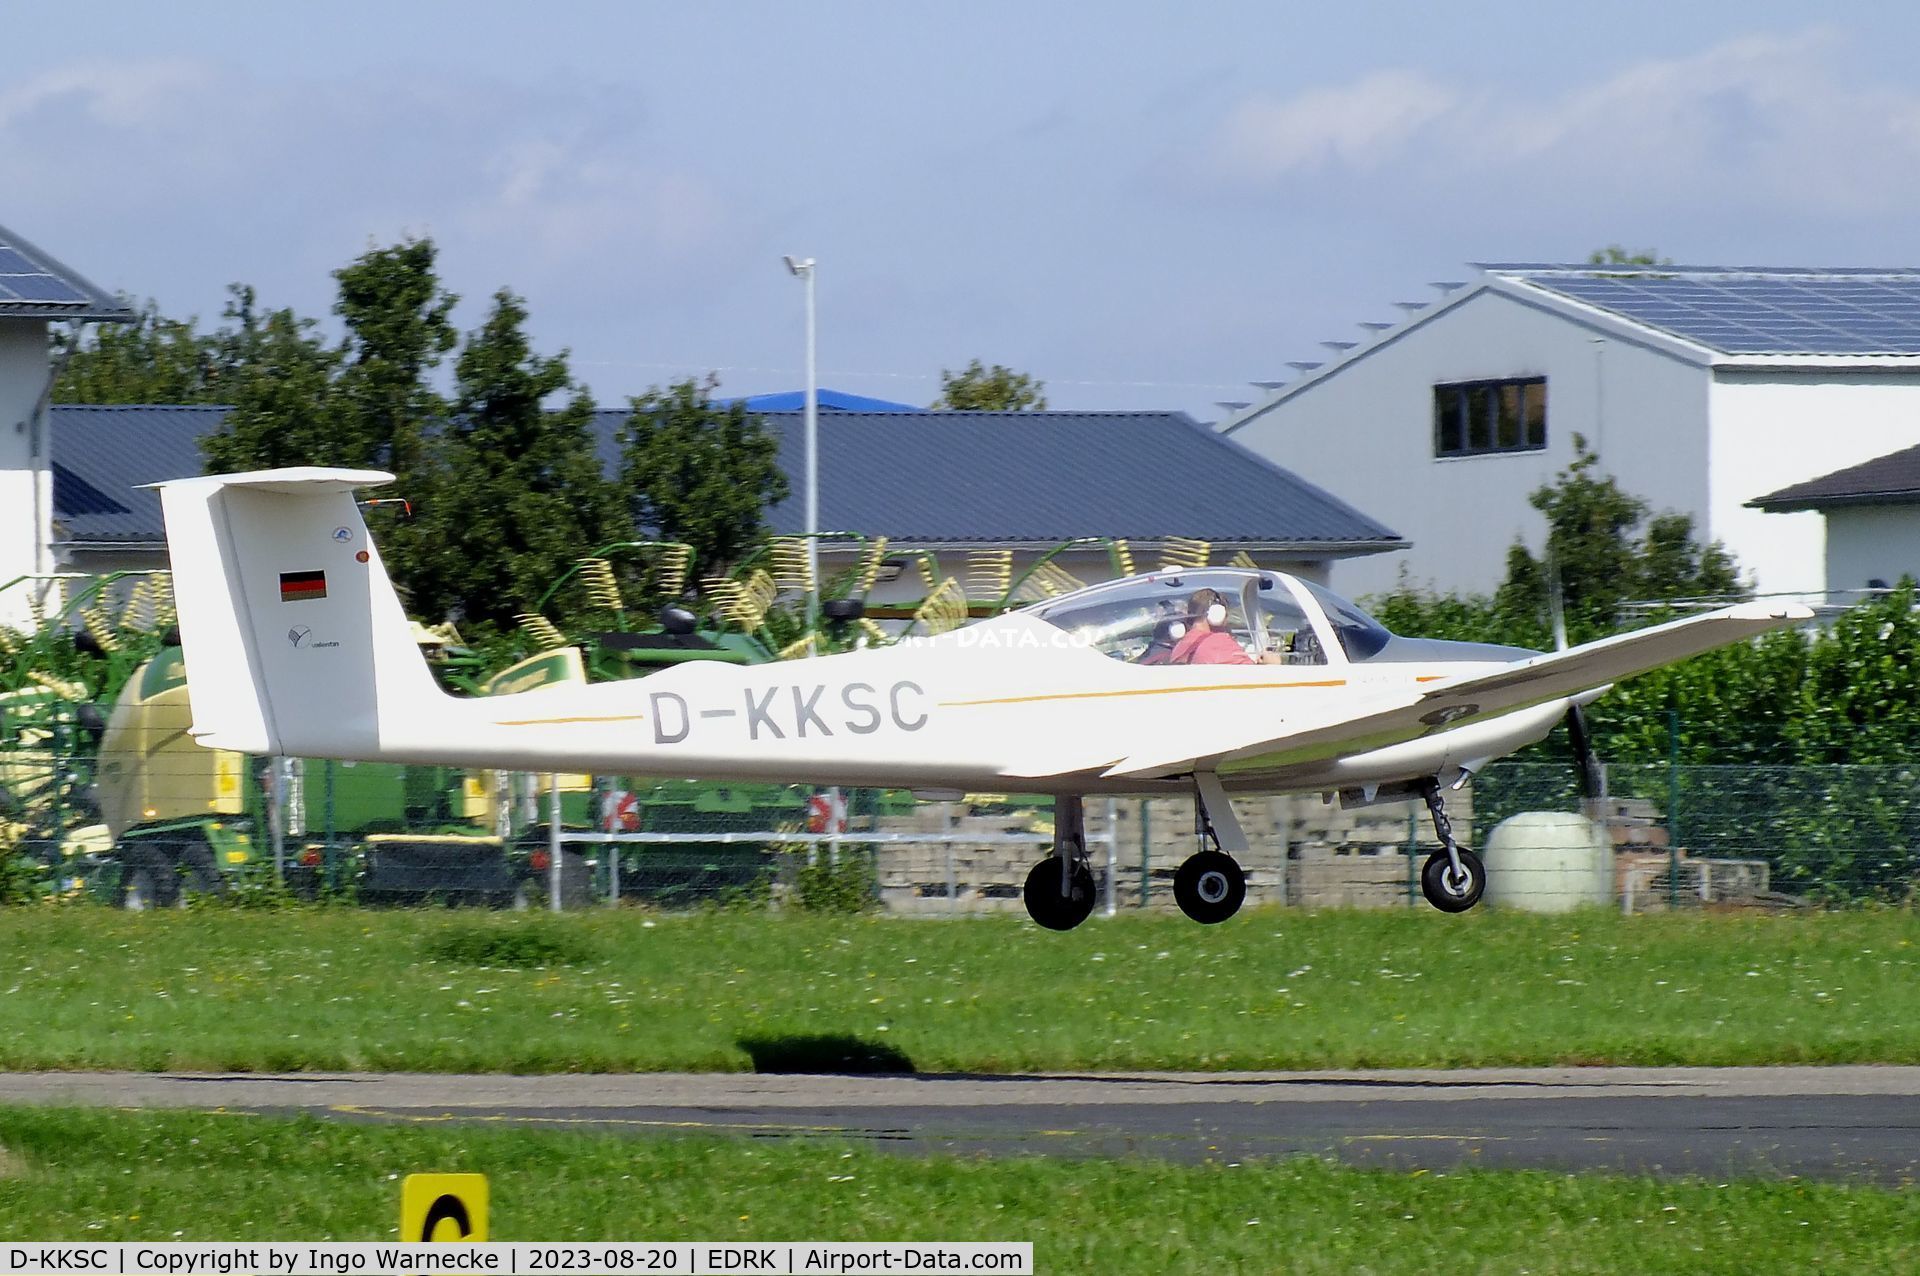 D-KKSC, Valentin Taifun 17E C/N 1013, Valentin Taifun 17E at Koblenz-Winningen airfield